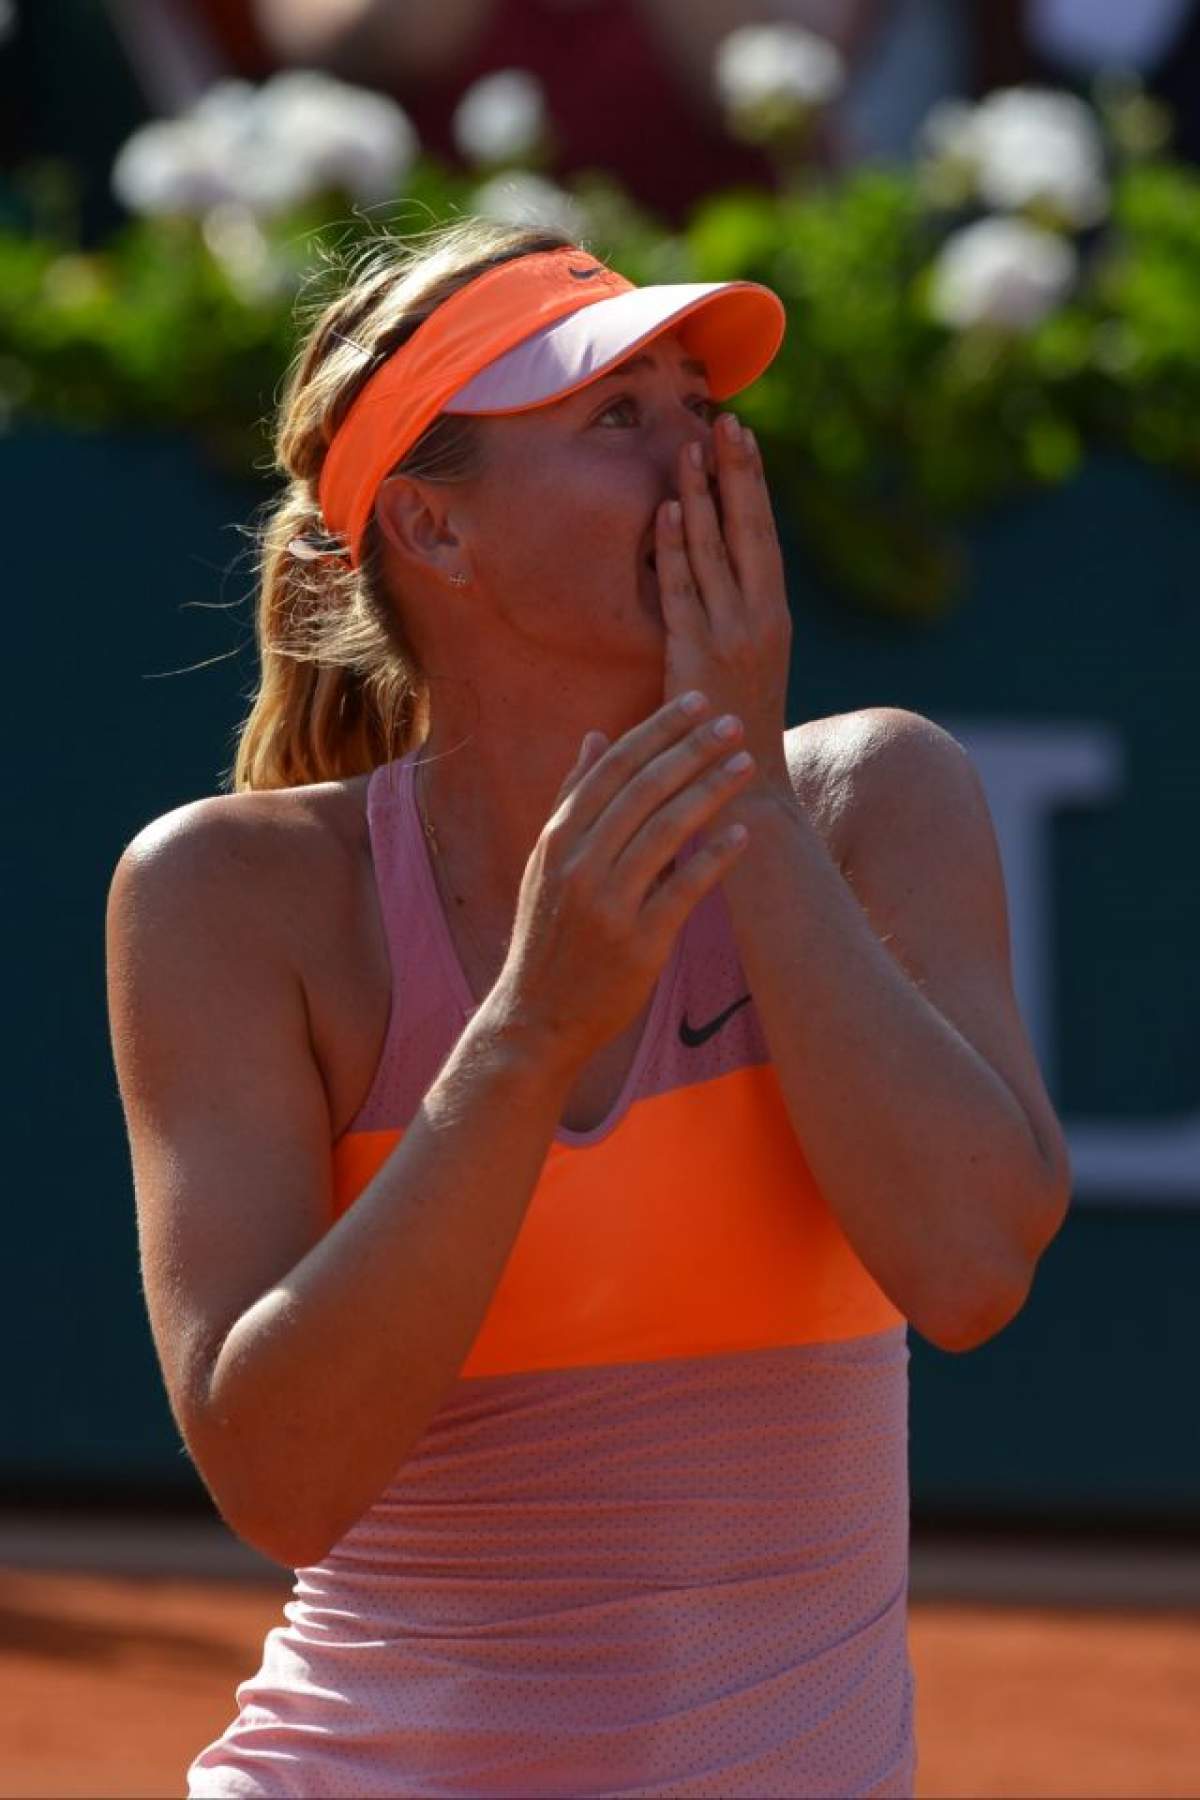 FOTO A detronat-o pe Maria Sharapova! Ea este noul star sexy al tenisului mondial